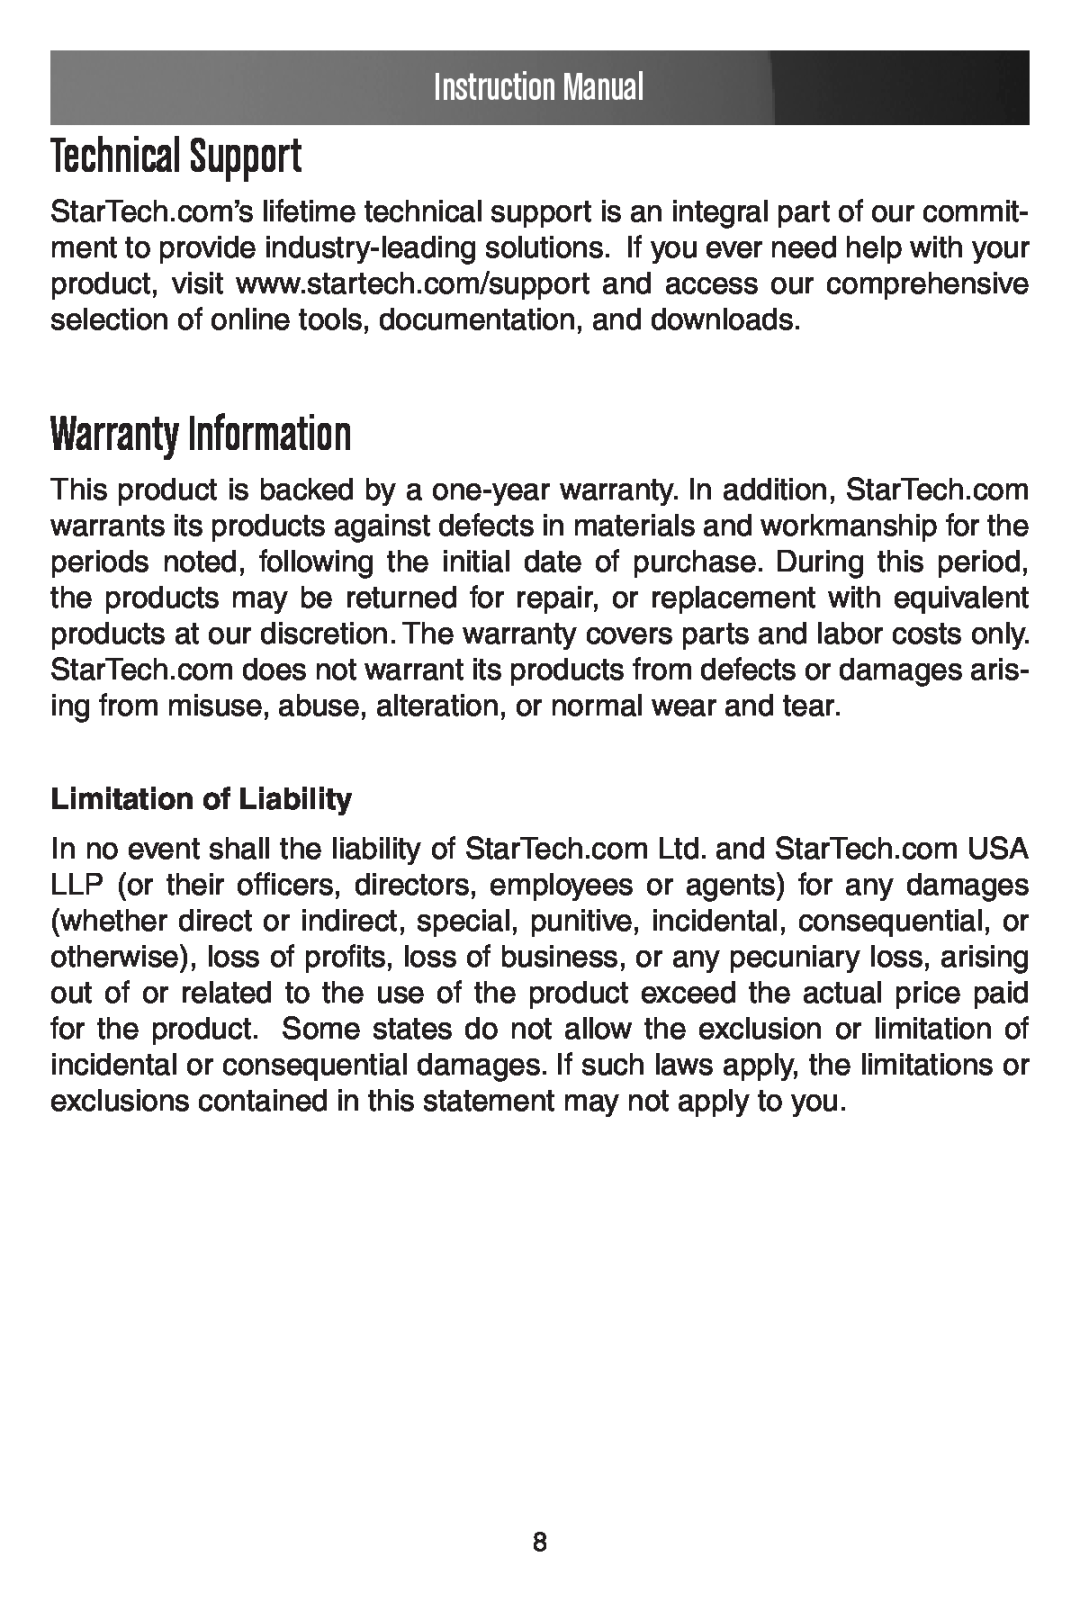 StarTech.com SAT2510BU2, SAT2510U2 Technical Support, Warranty Information, Limitation of Liability, Instruction Manual 